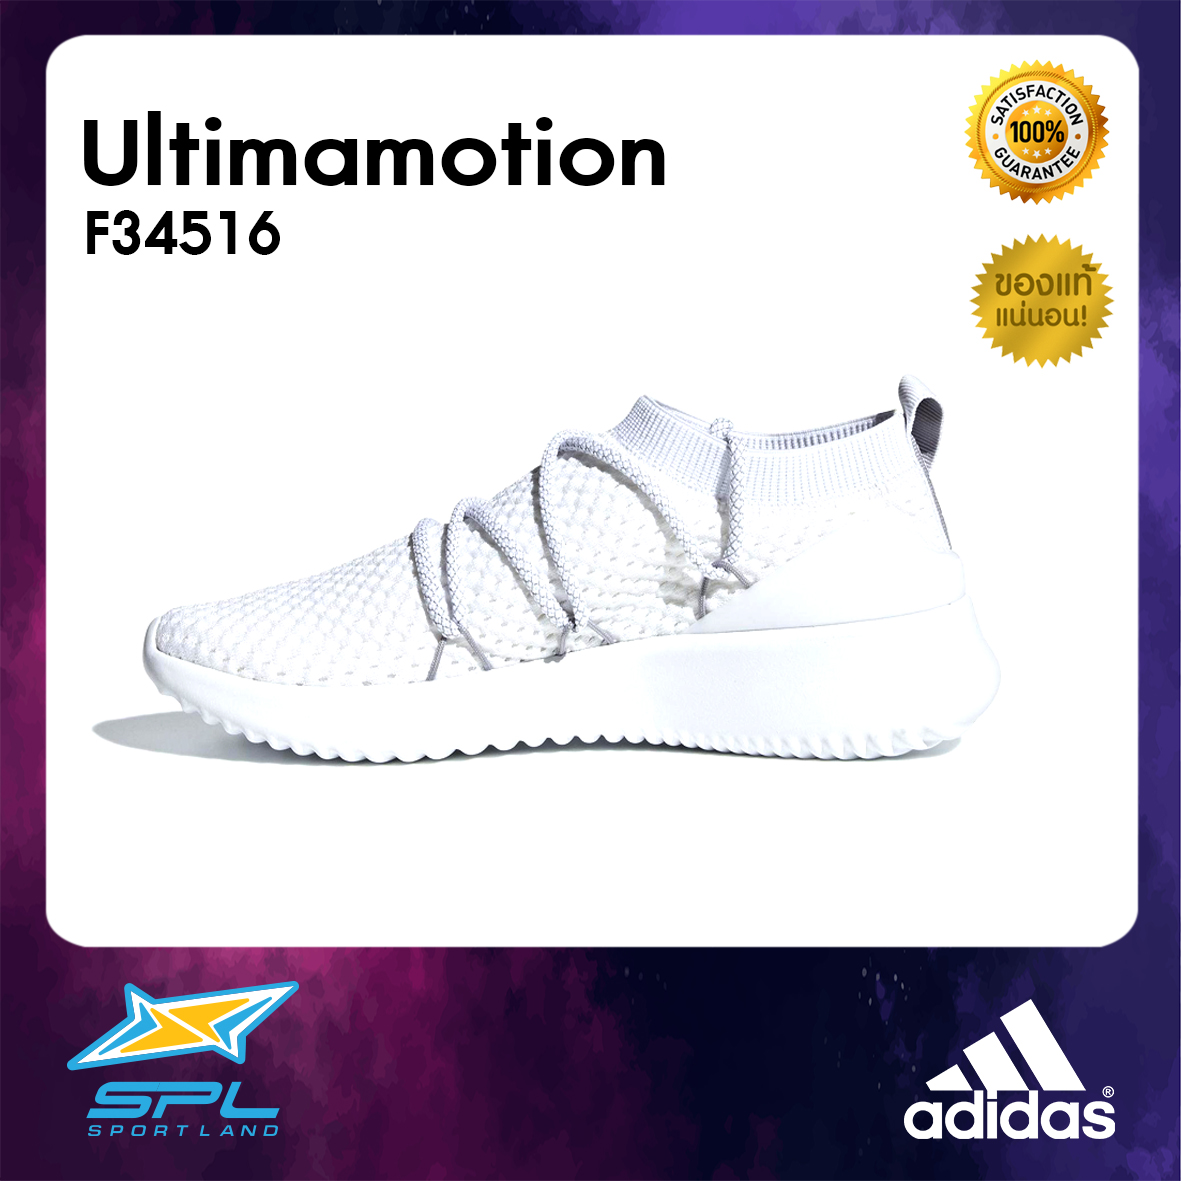 Adidas รองเท้าวิ่ง รองเท้าผู้หญิง รองเท้าผ้าใบ แฟชั่น  RUNNING WOMEN Shoe Ultimamotion F34516 อาดิดาส (2800)